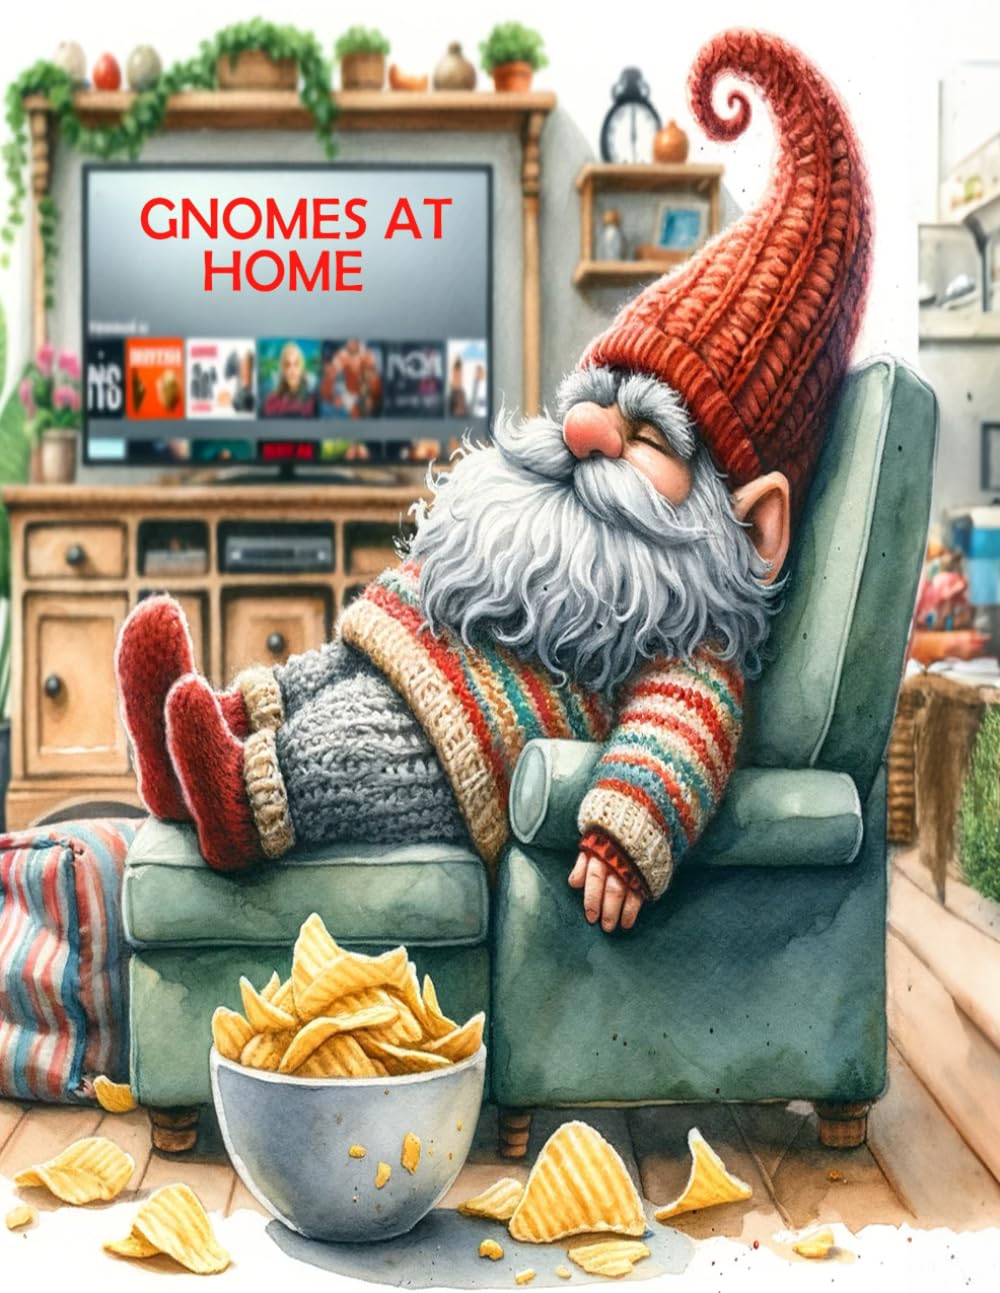 Gnomes at Home Coloring Book